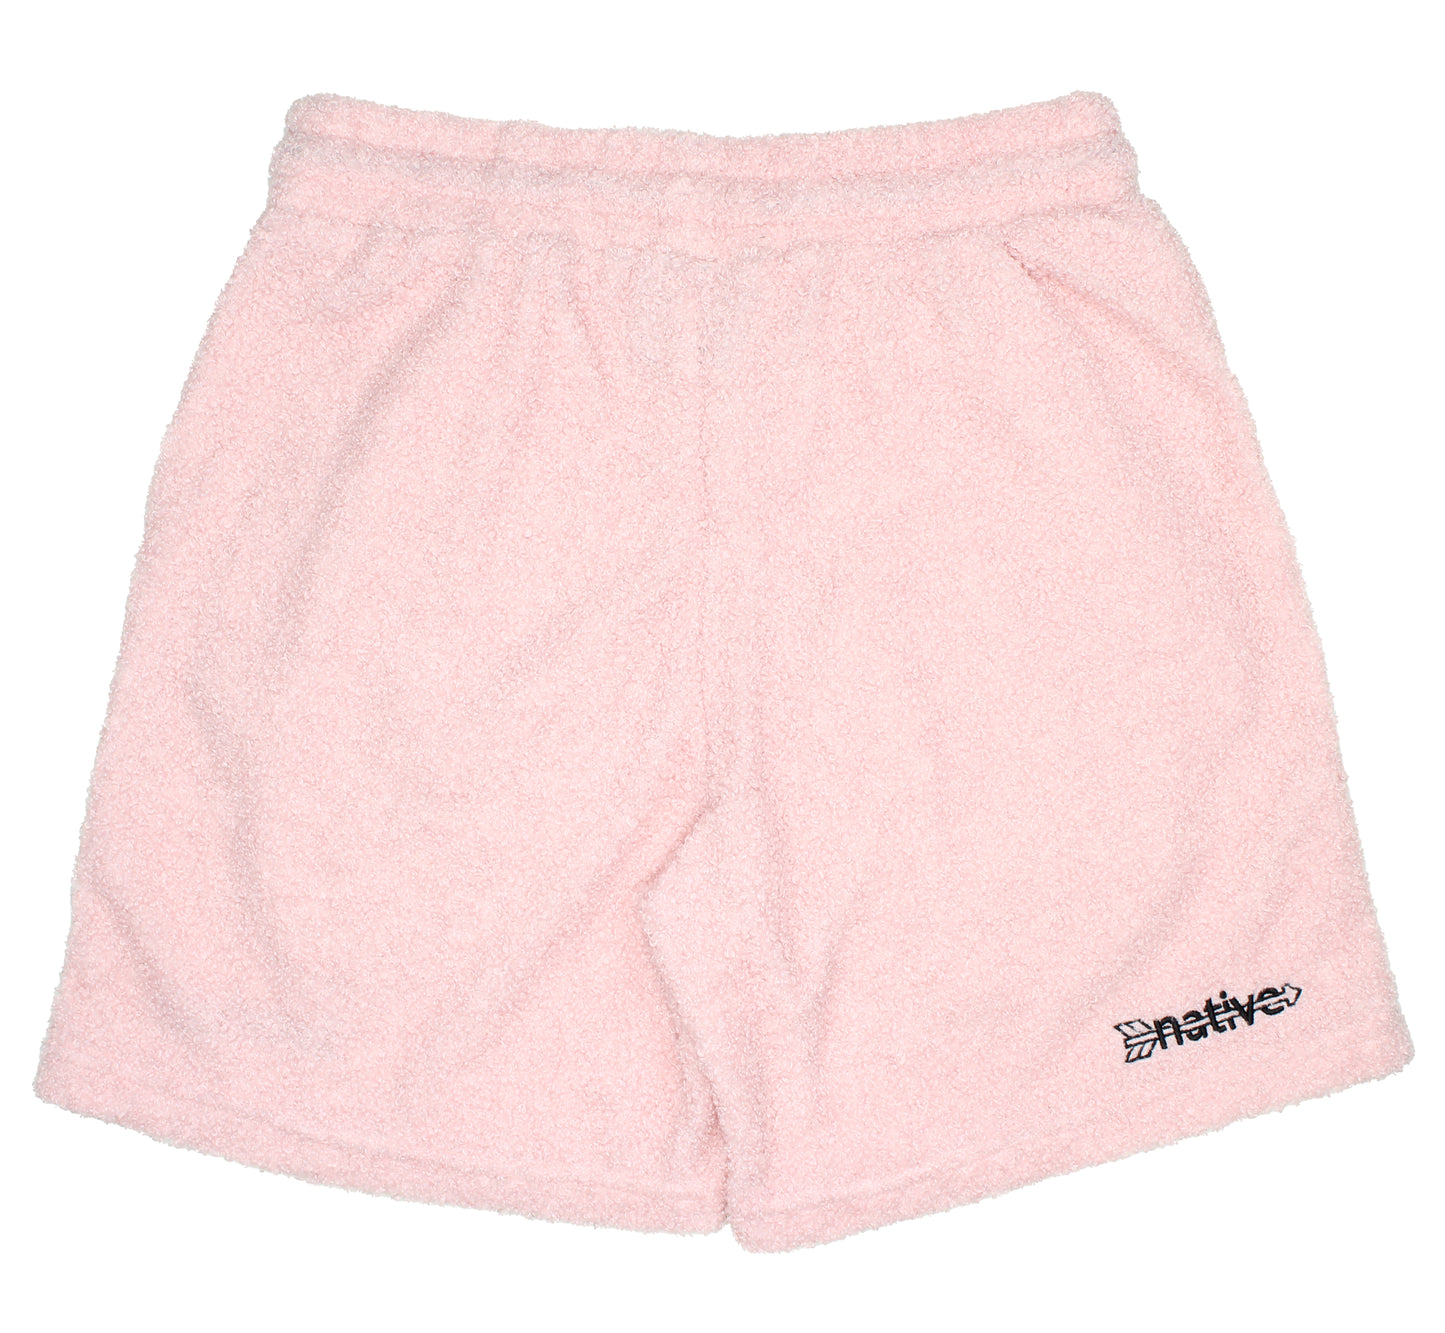 sherpa shorts in bubblegum